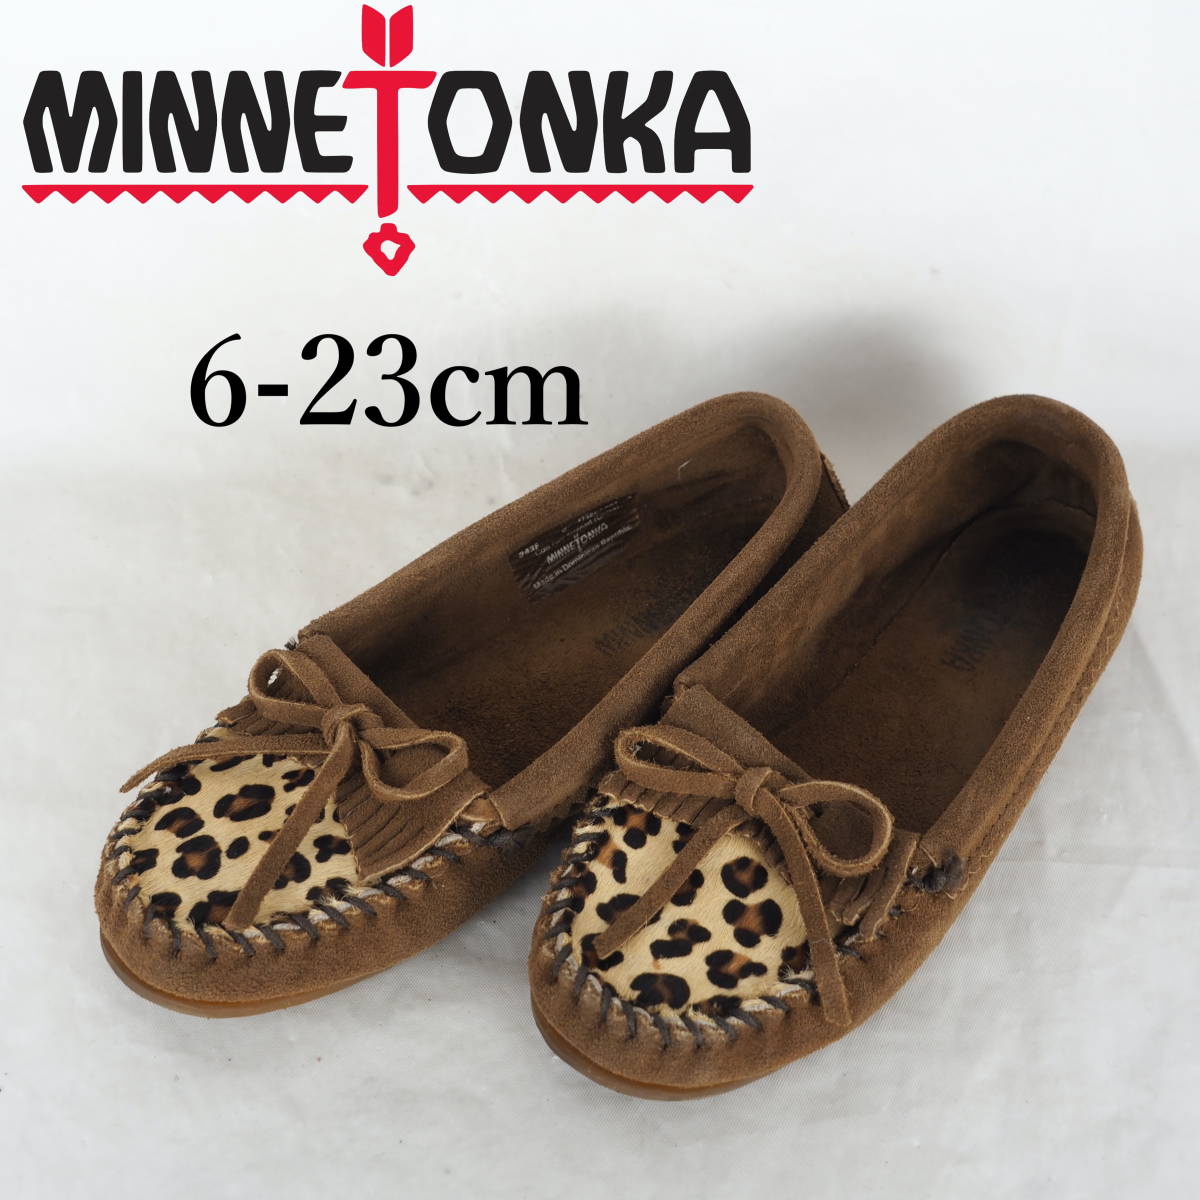 MK4605*MINNETONKA* Minnetonka * женская обувь *6-23cm* чай 